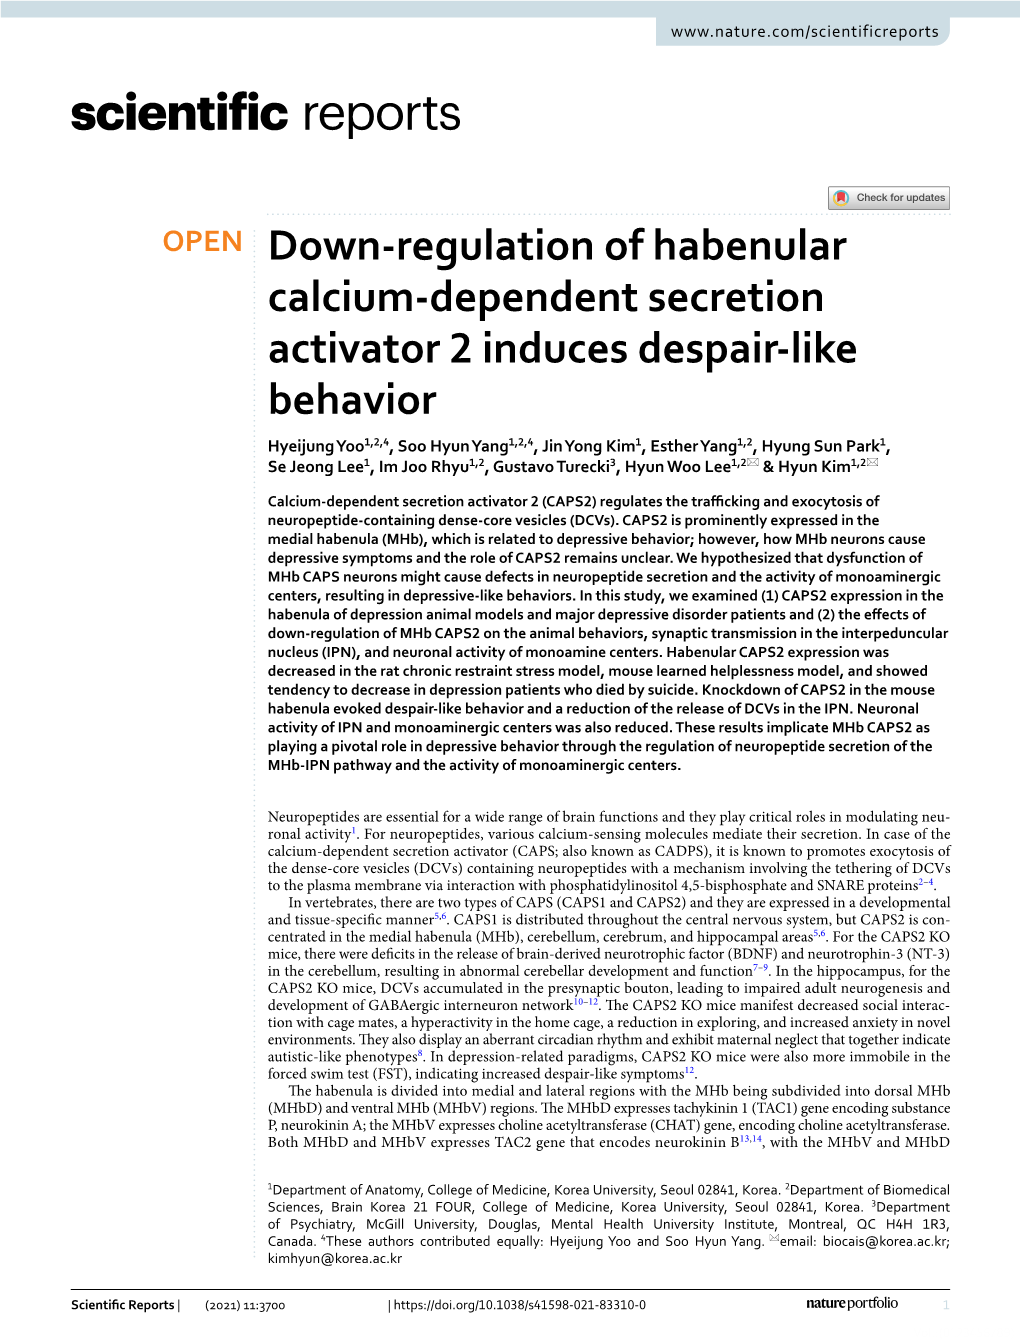 Down-Regulation of Habenular Calcium-Dependent Secretion Activator 2